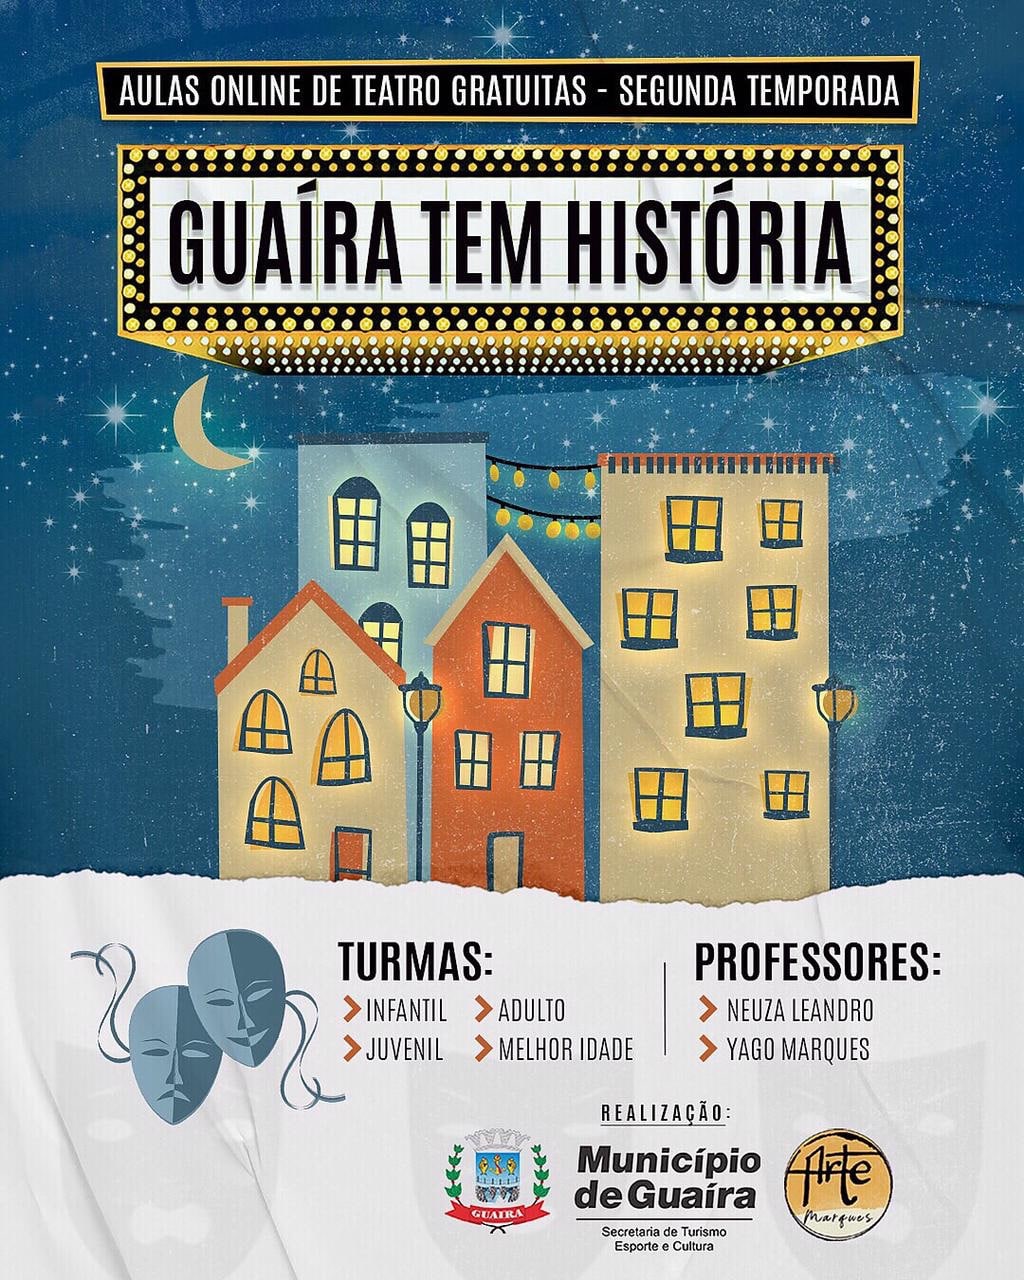 Arte - Projeto gratuito ensina linguagem do teatro aos guairenses • Portal Guaíra